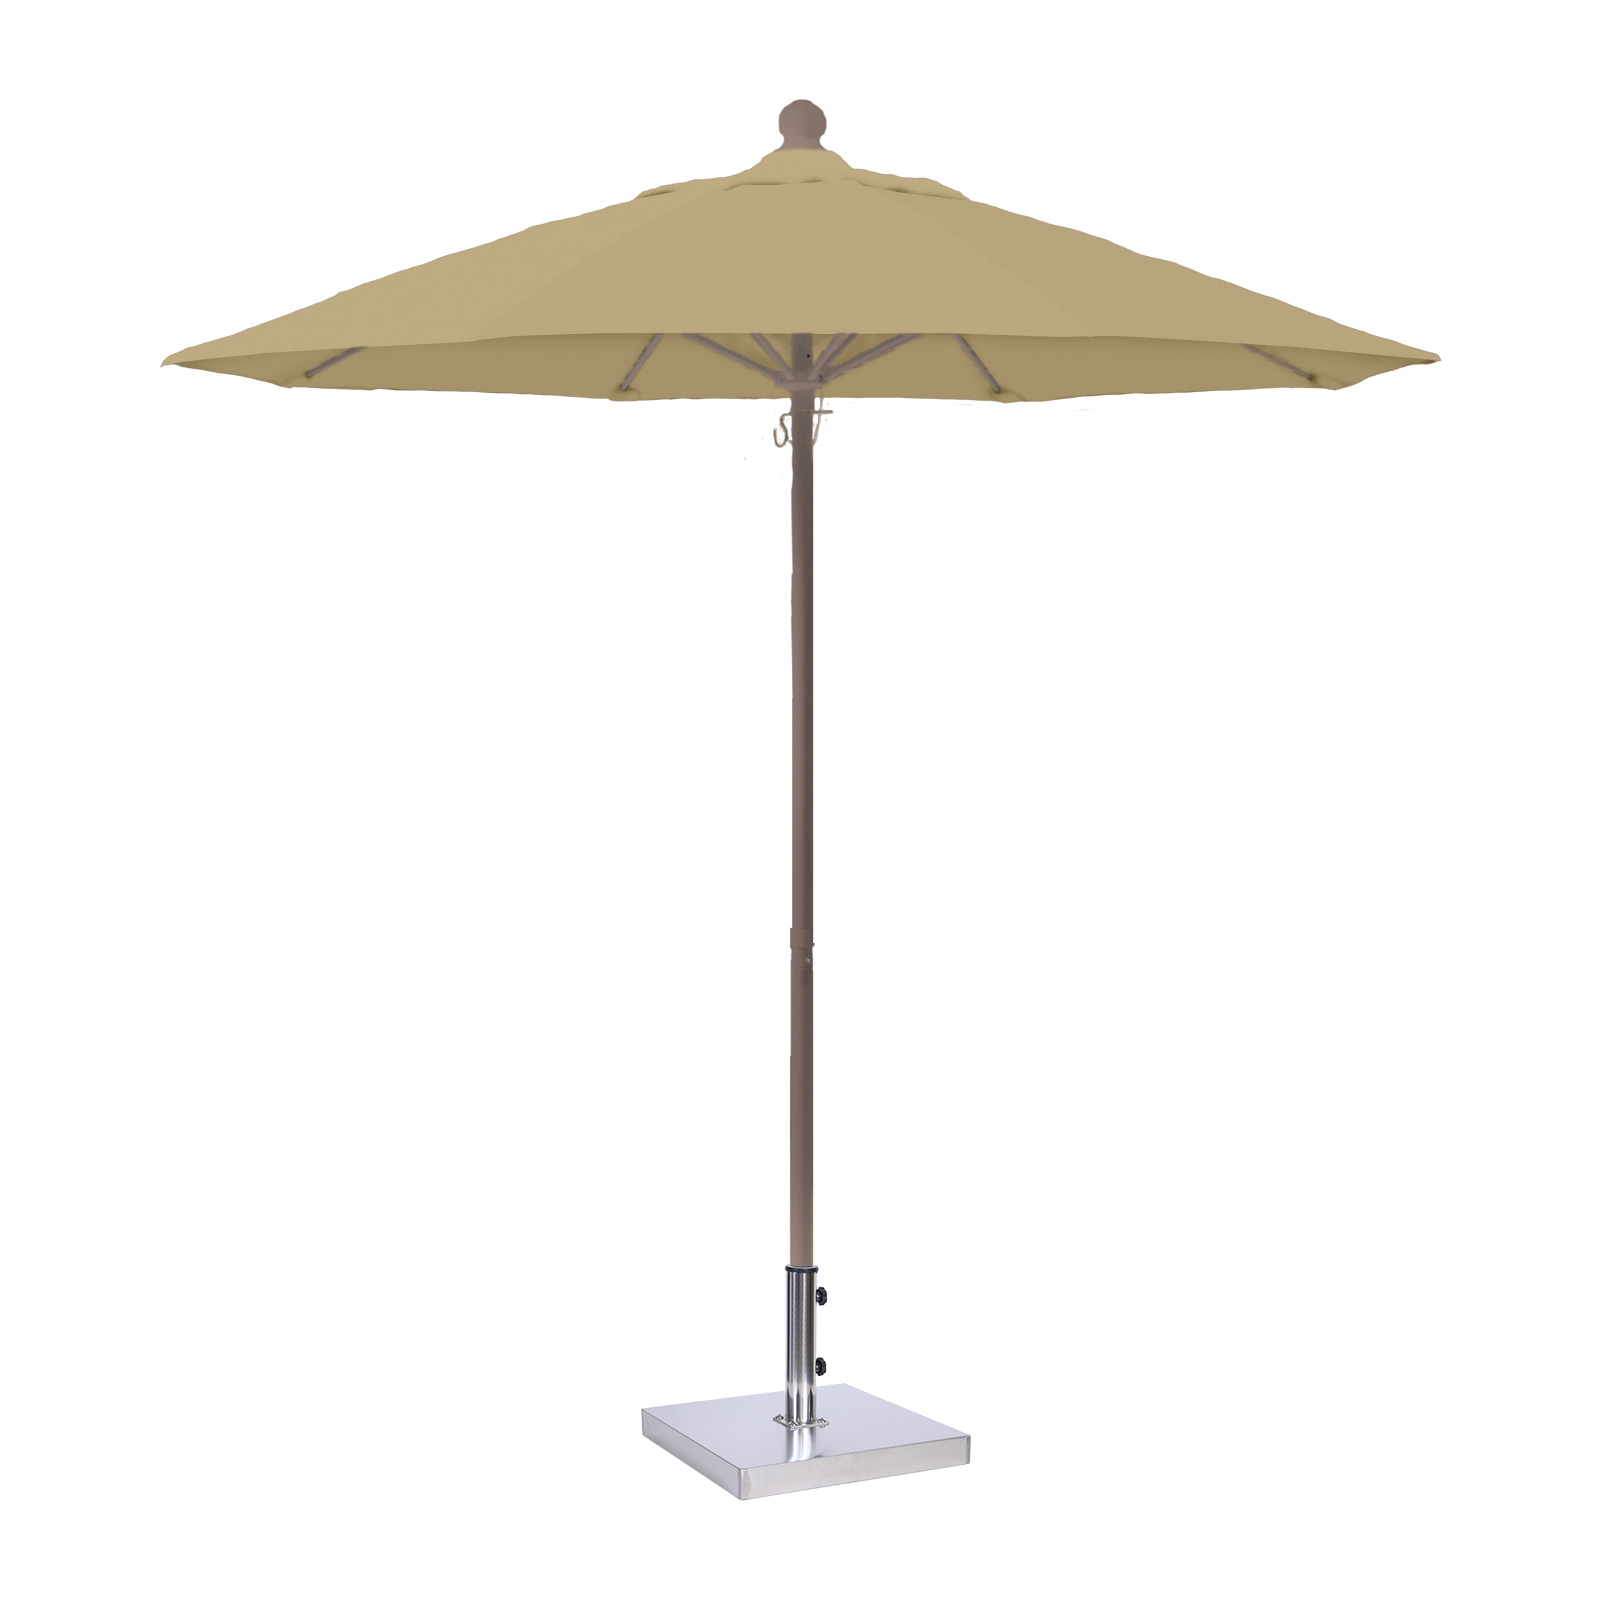 MiYu Furniture  7.5 ft Fiberglass Market Umbrella - Champagne Frame